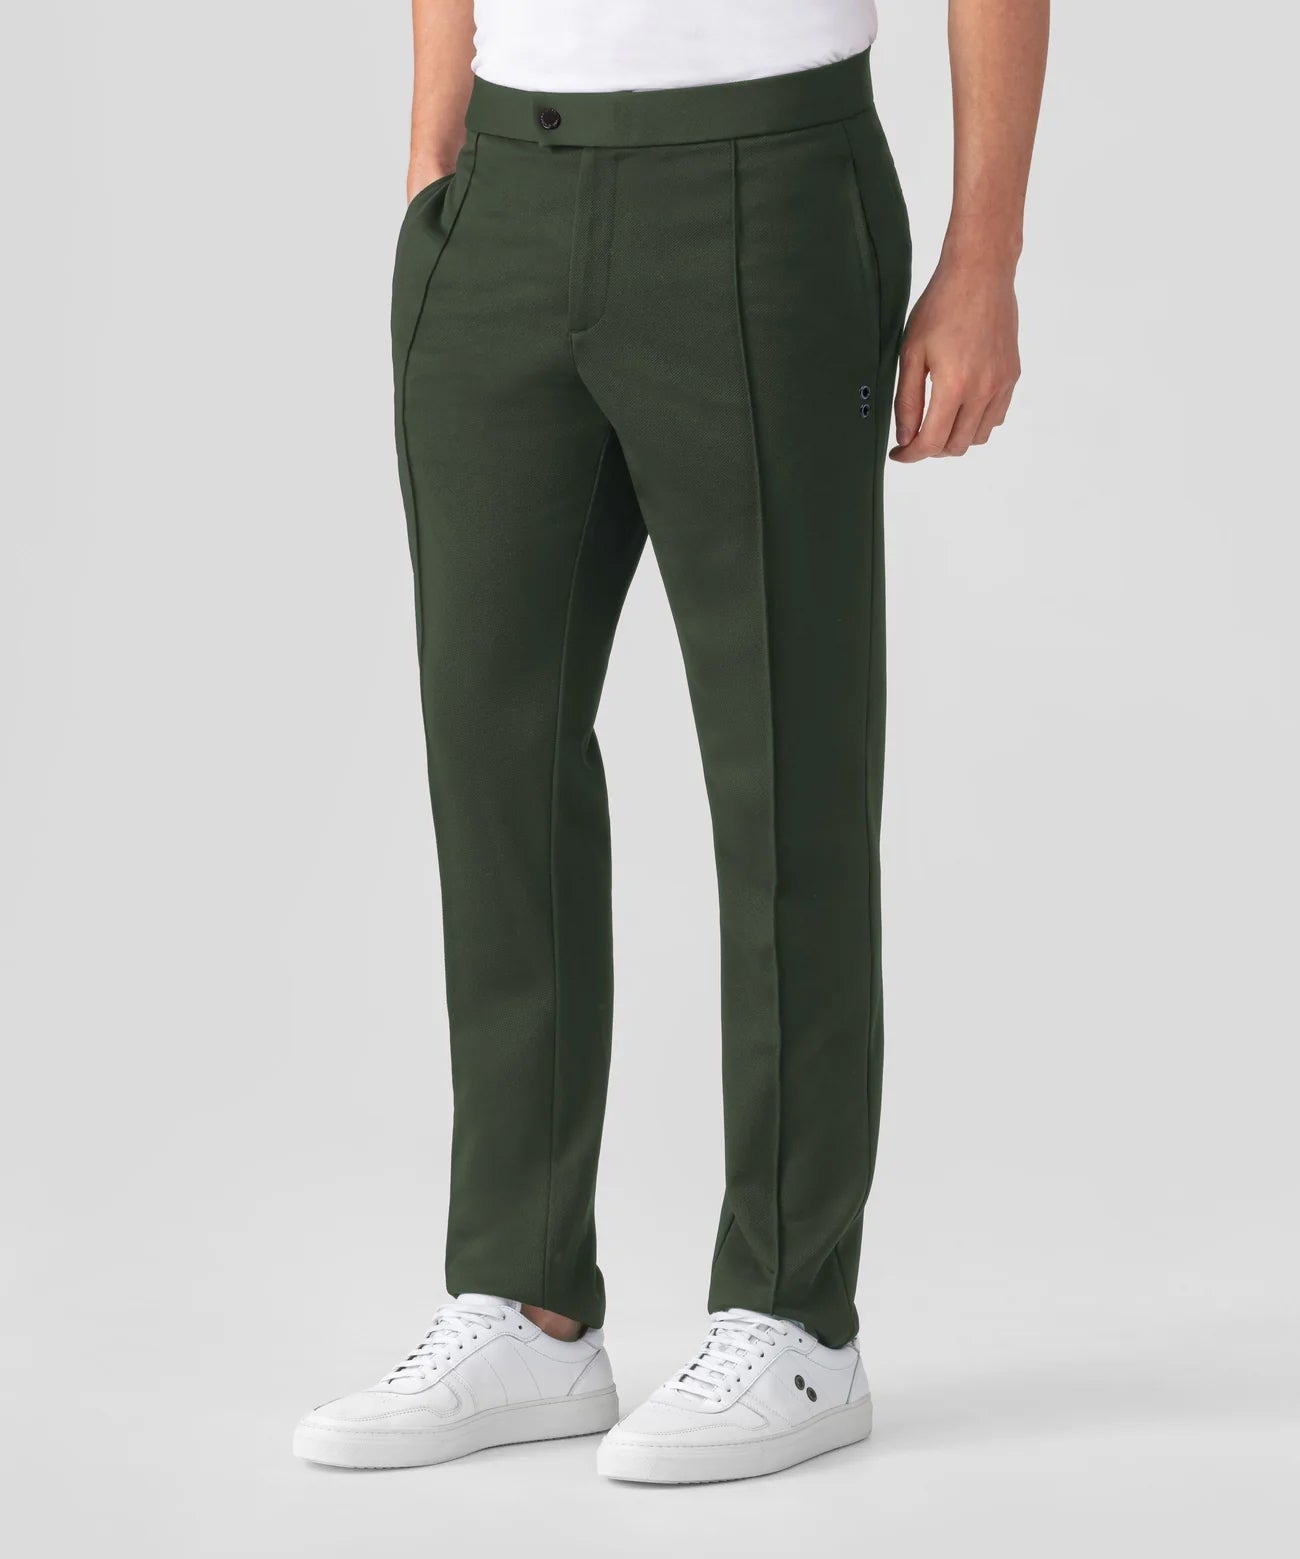 RD Tennis Pants: Dark Army Green